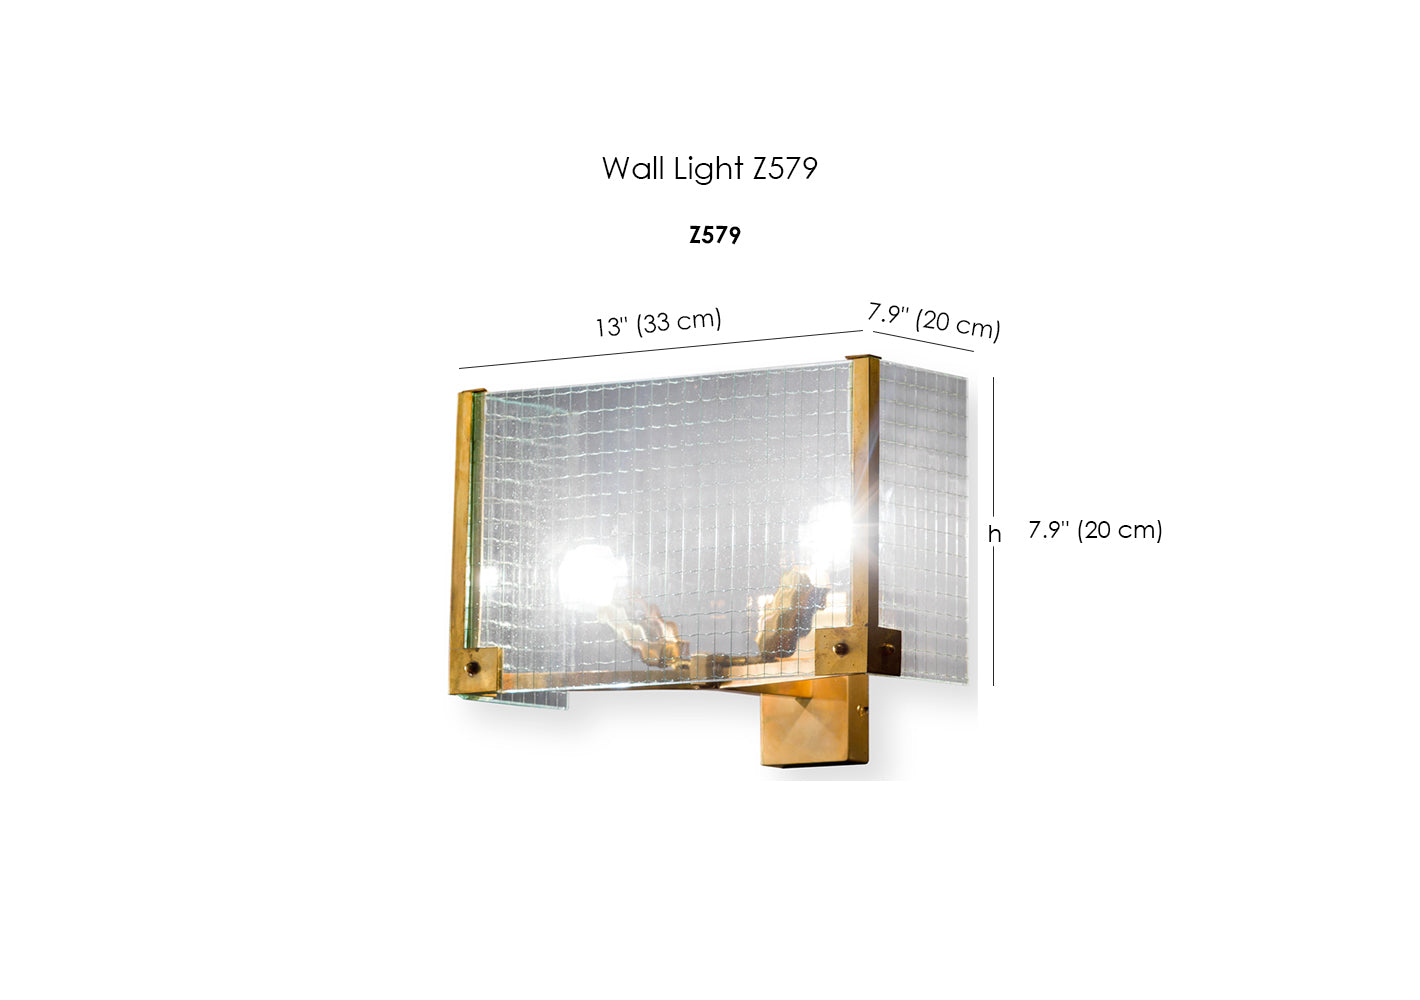 Wall Light Z579